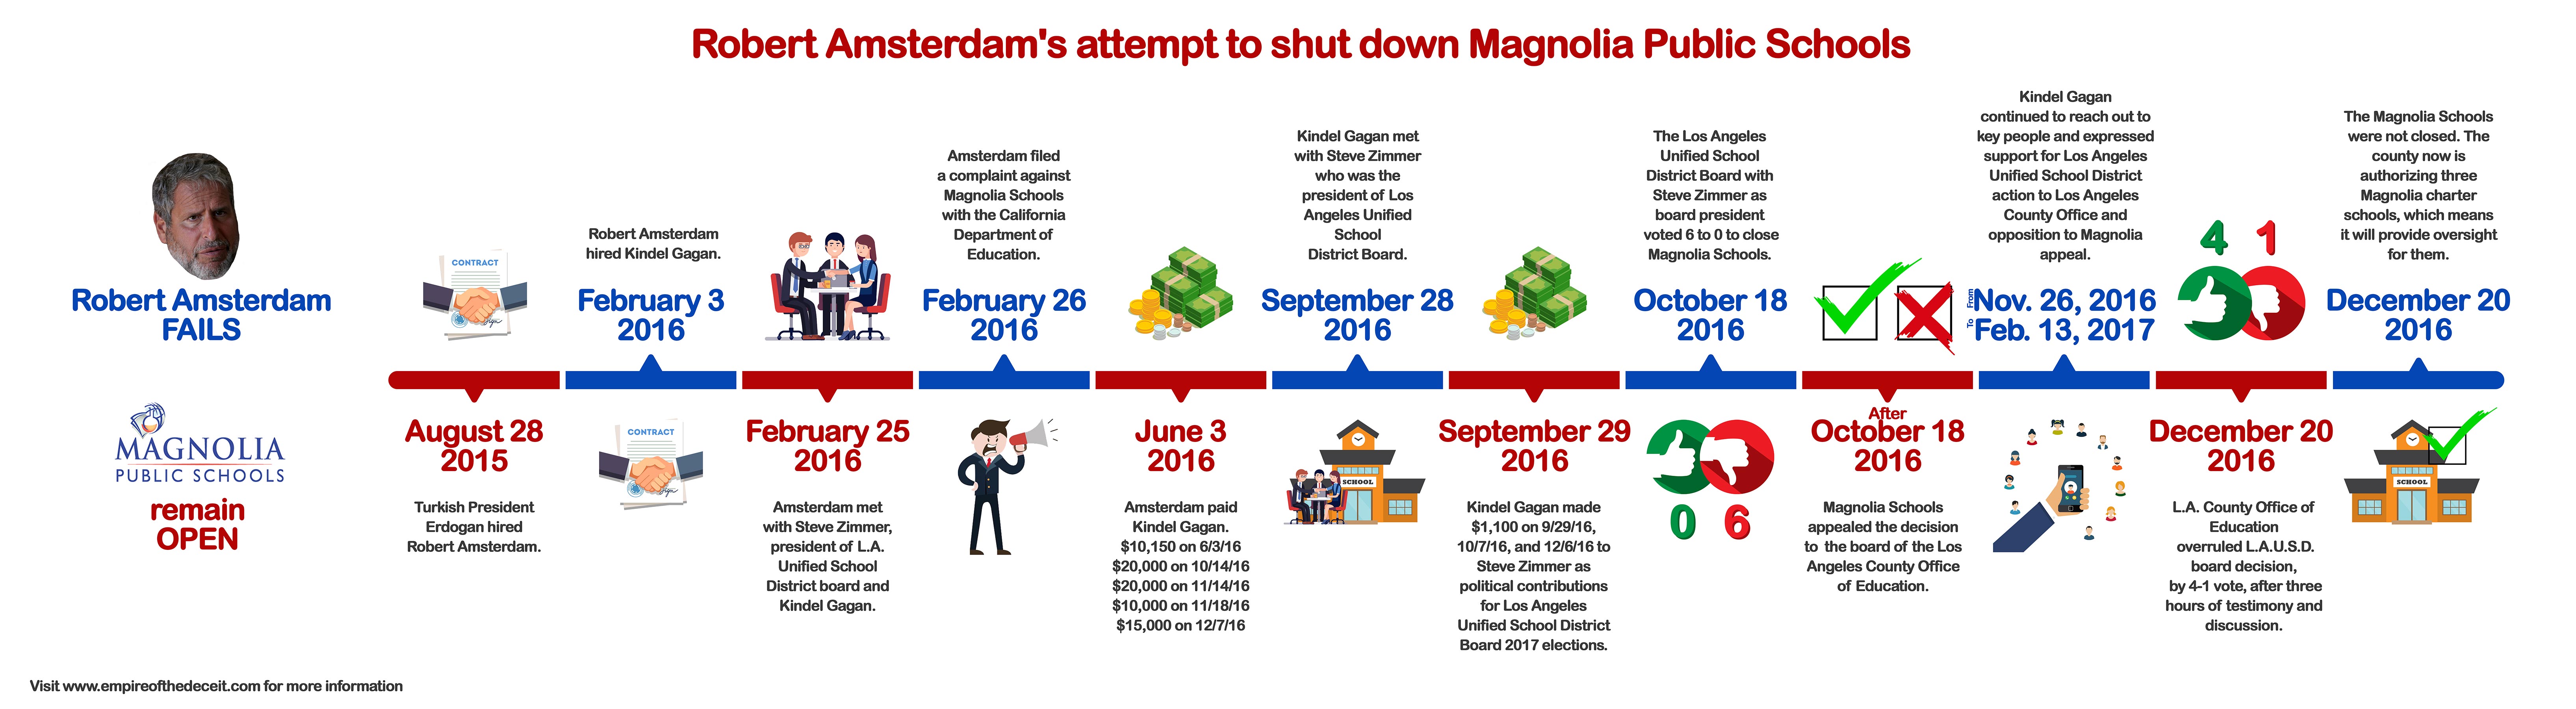 MagnoliaSchools-vs-RobertAmsterdam-Timeline.jpg